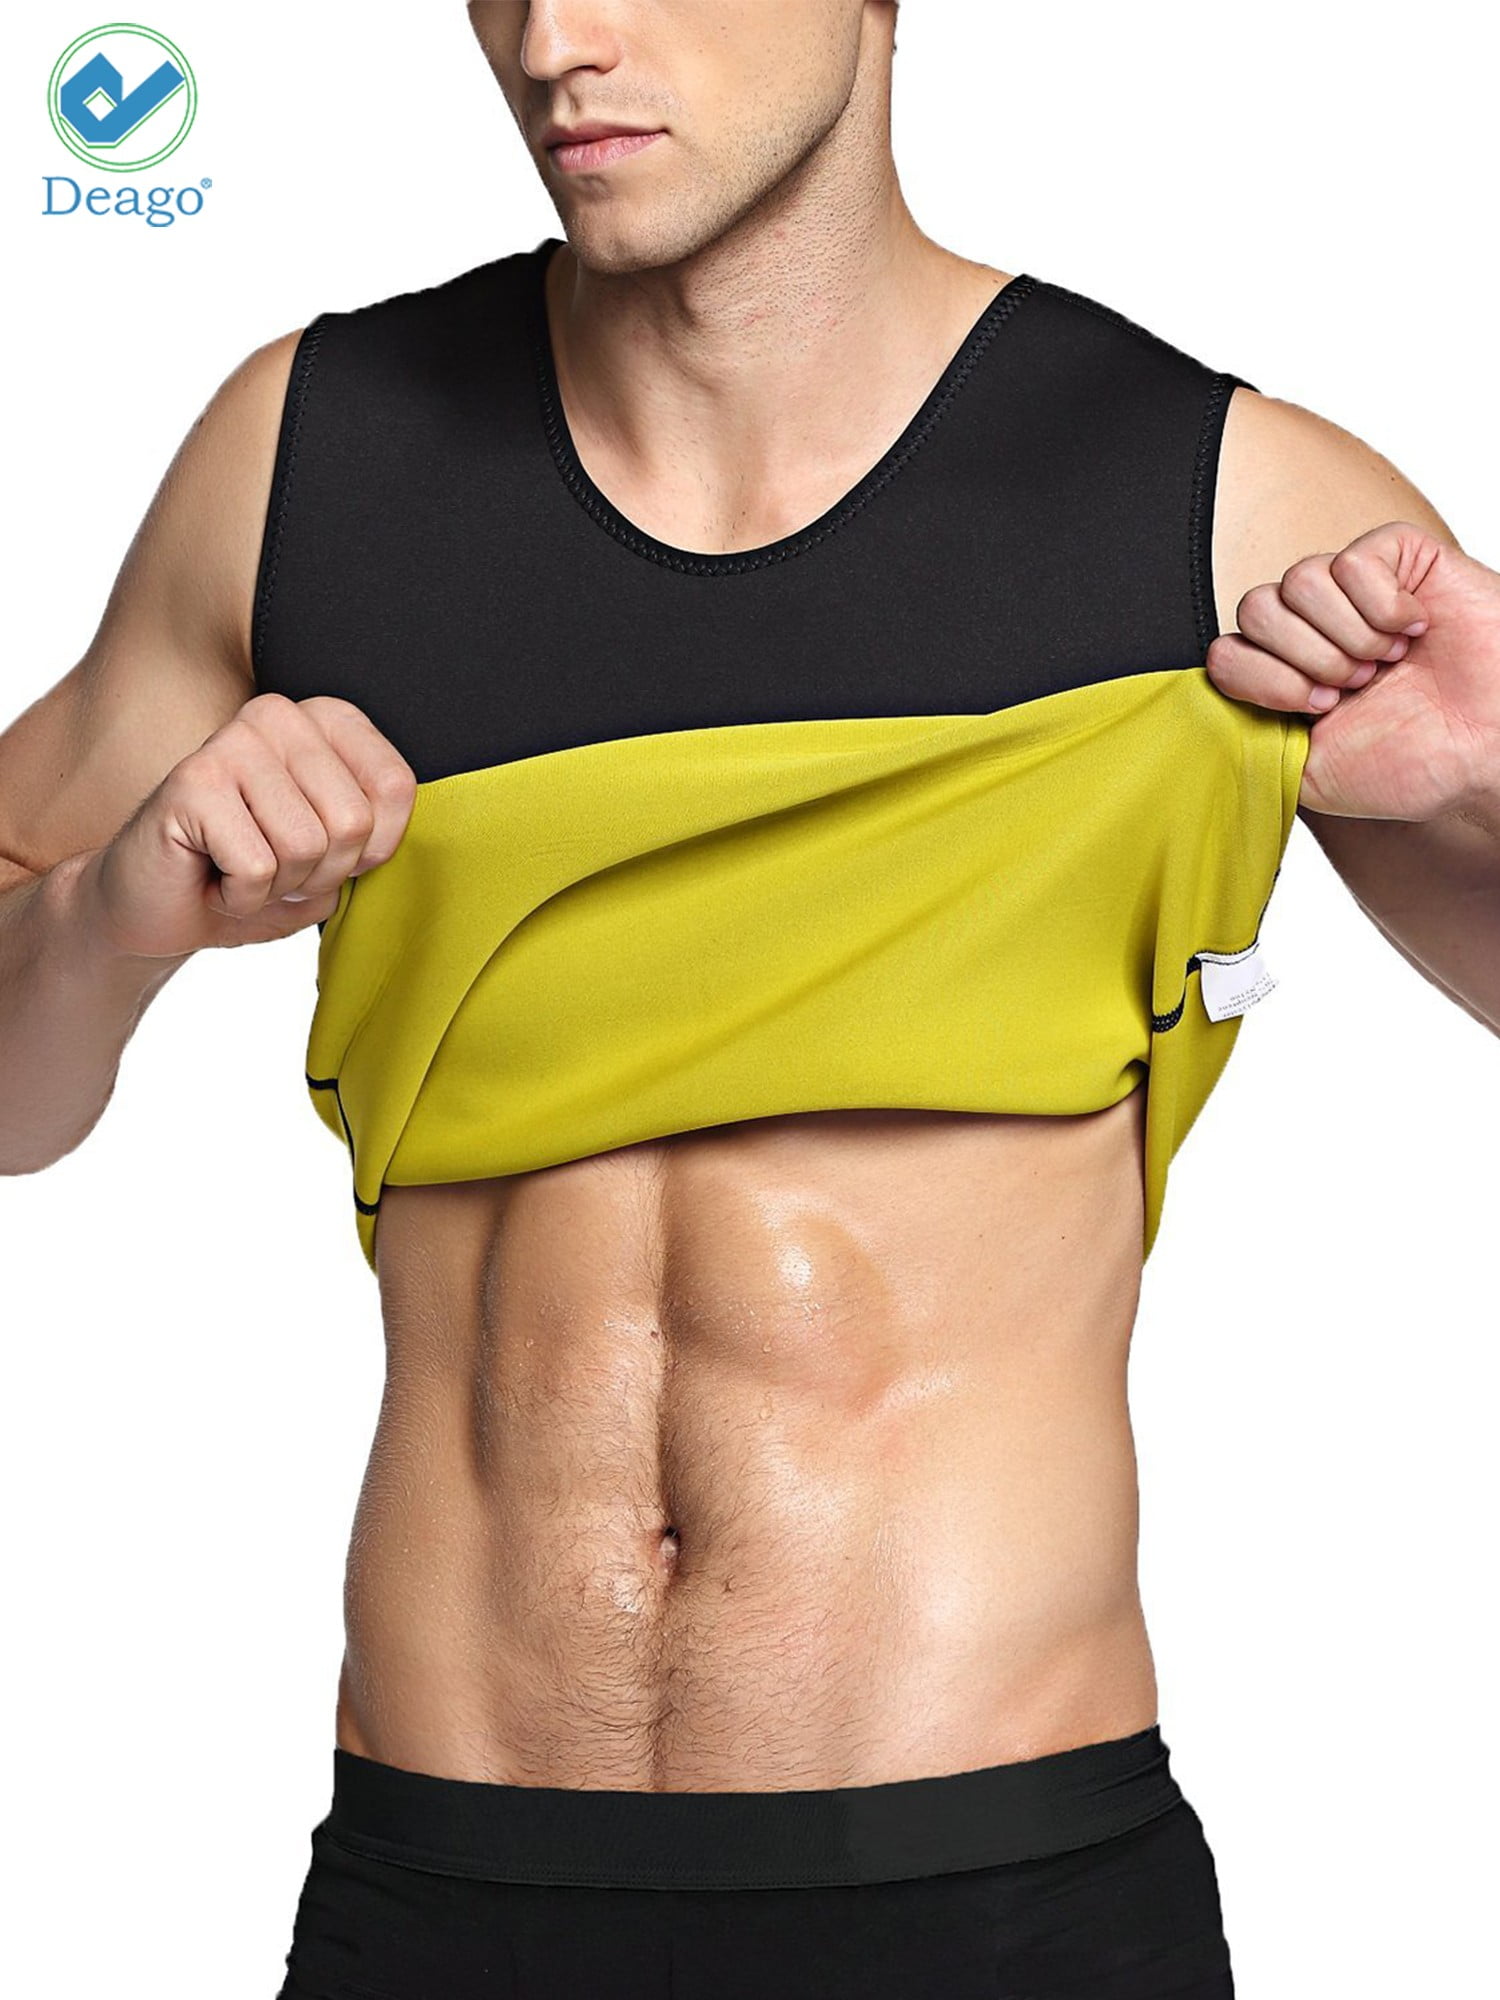 Men Sweat Vest Hot Polymer Sauna Suit Workout Tank Top Weight Loss Body Shaper